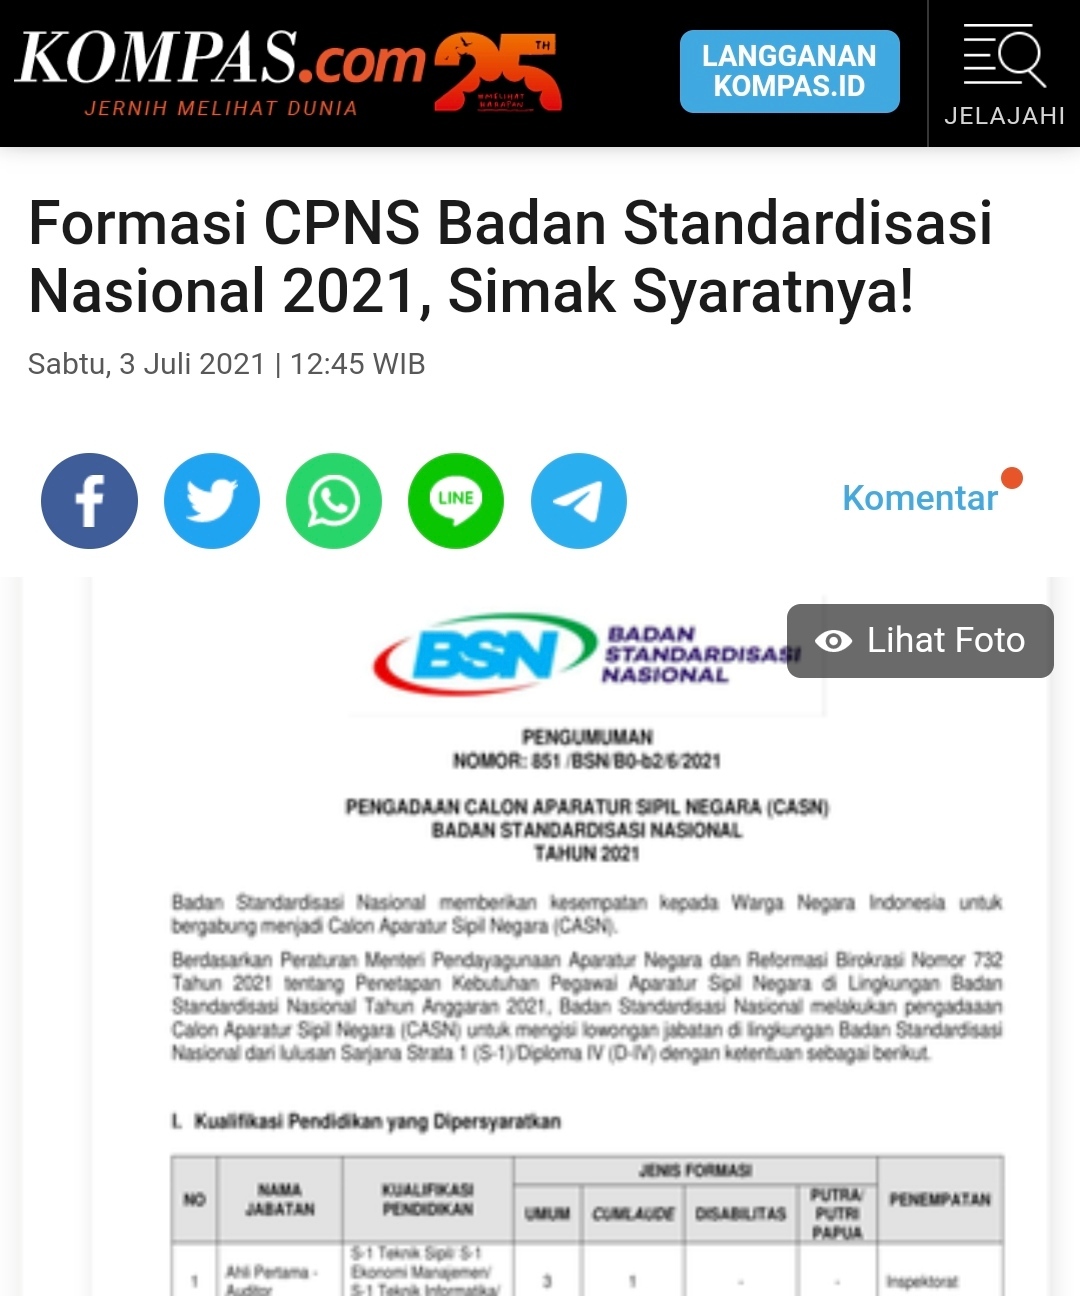 Formasi Cpns Badan Standardisasi Nasional 2021 Simak Syaratnya Bsn Badan Standardisasi Nasional National Standardization Agency Of Indonesia Setting The Standard In Indonesia Iso Sni Wto